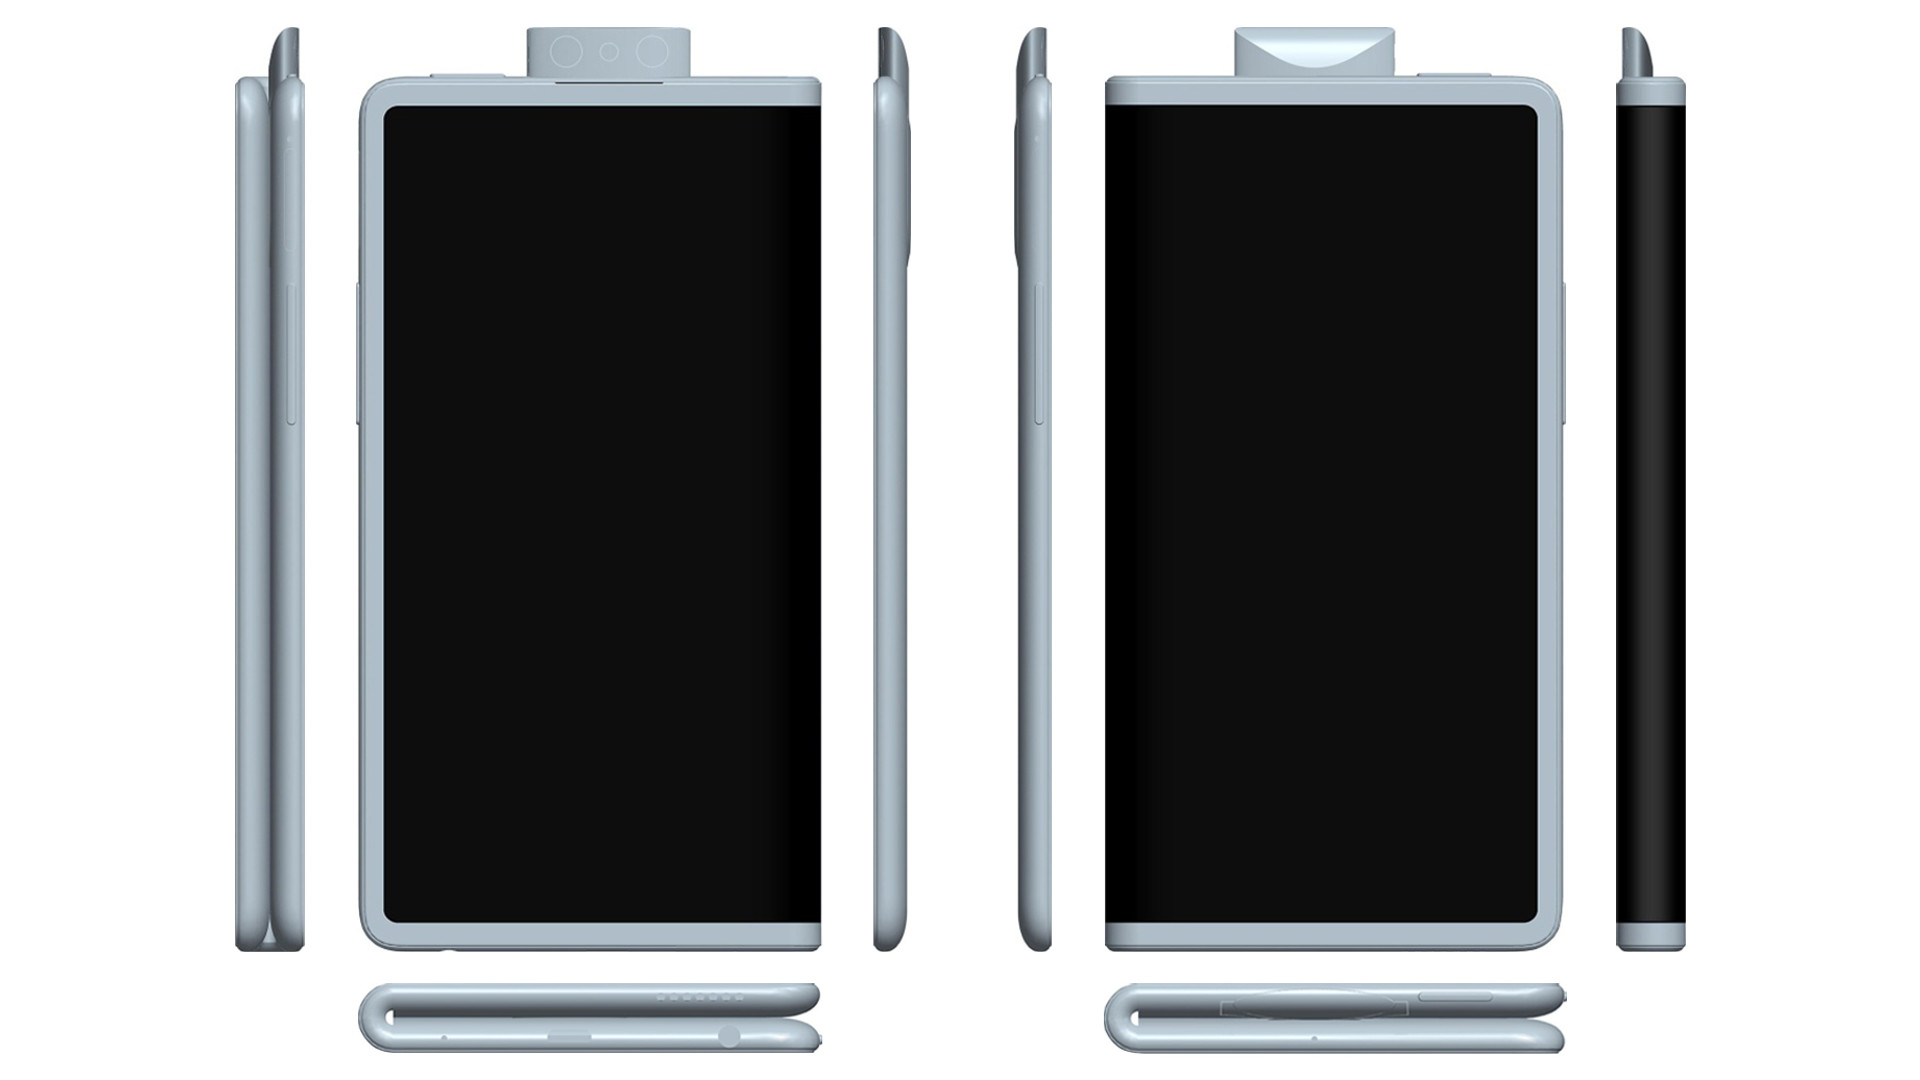 An Oppo foldable phone design.